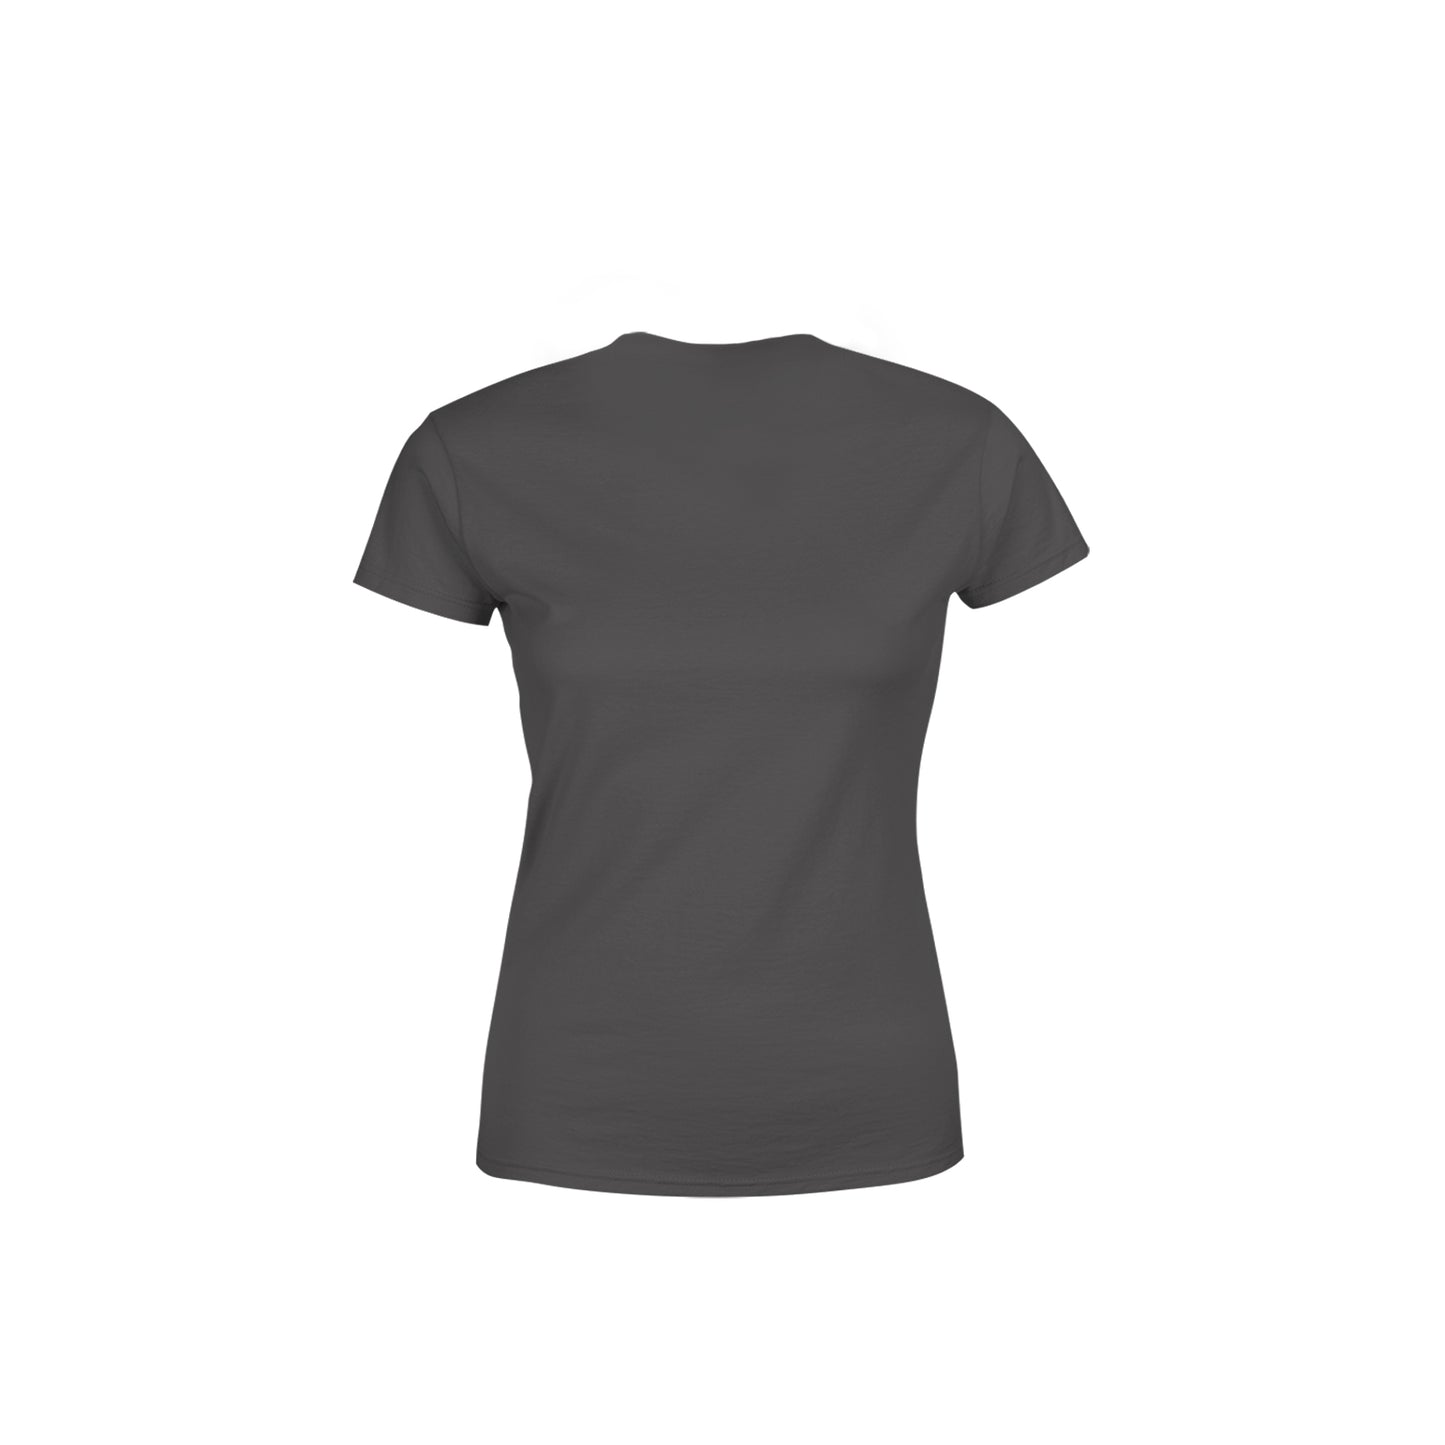 30 Number Women's T-Shirt (Charcoal Grey)